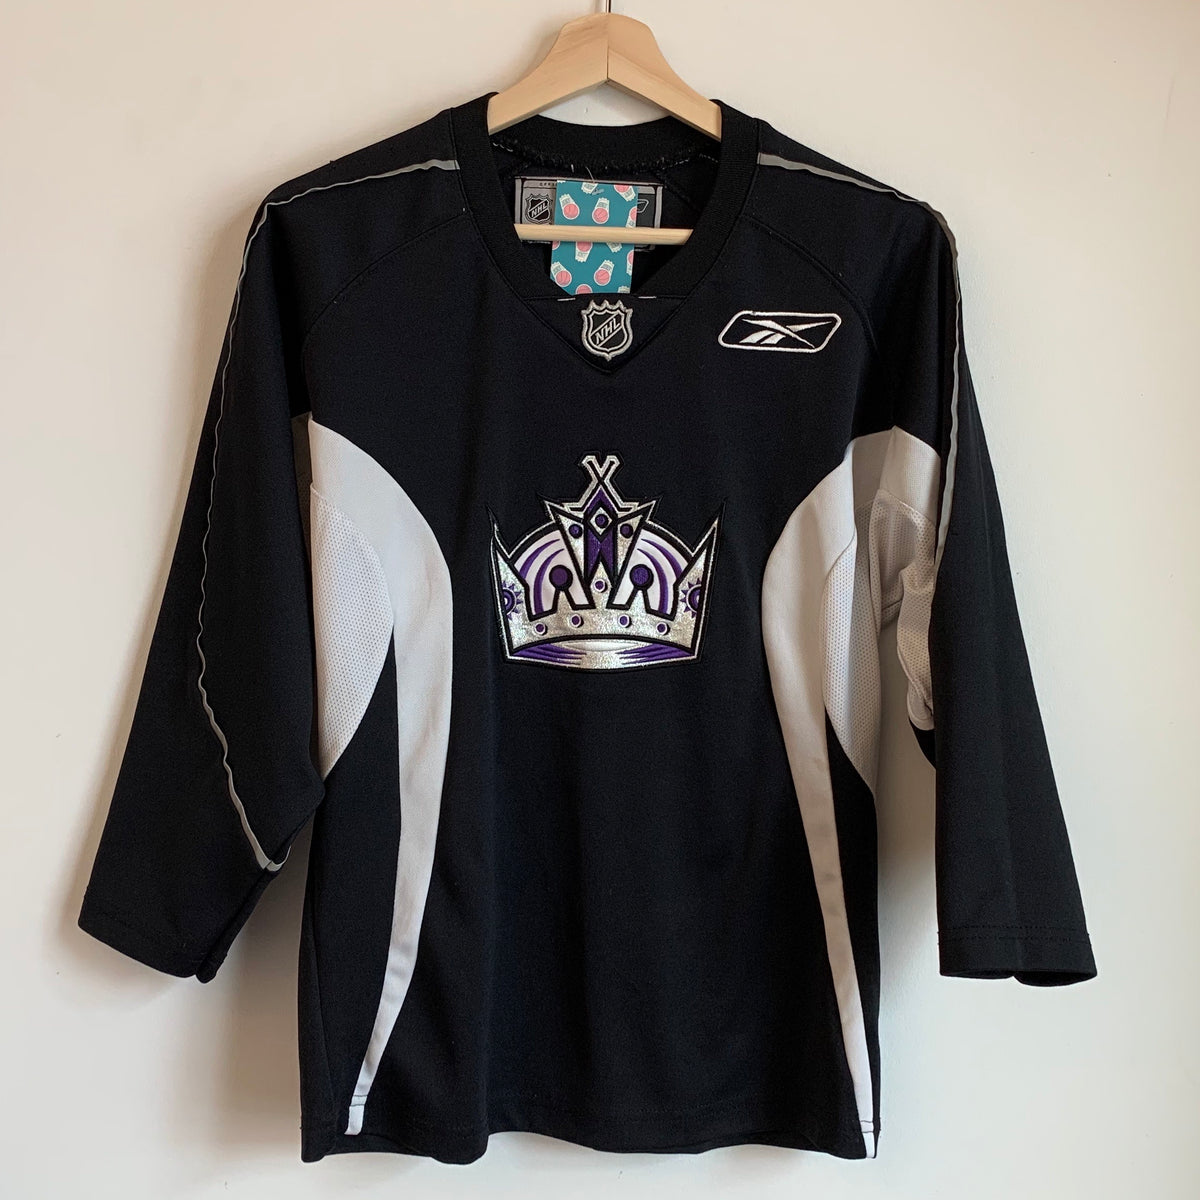 Los Angeles Kings Blank White Reebok NHL Hockey Jersey Size XL